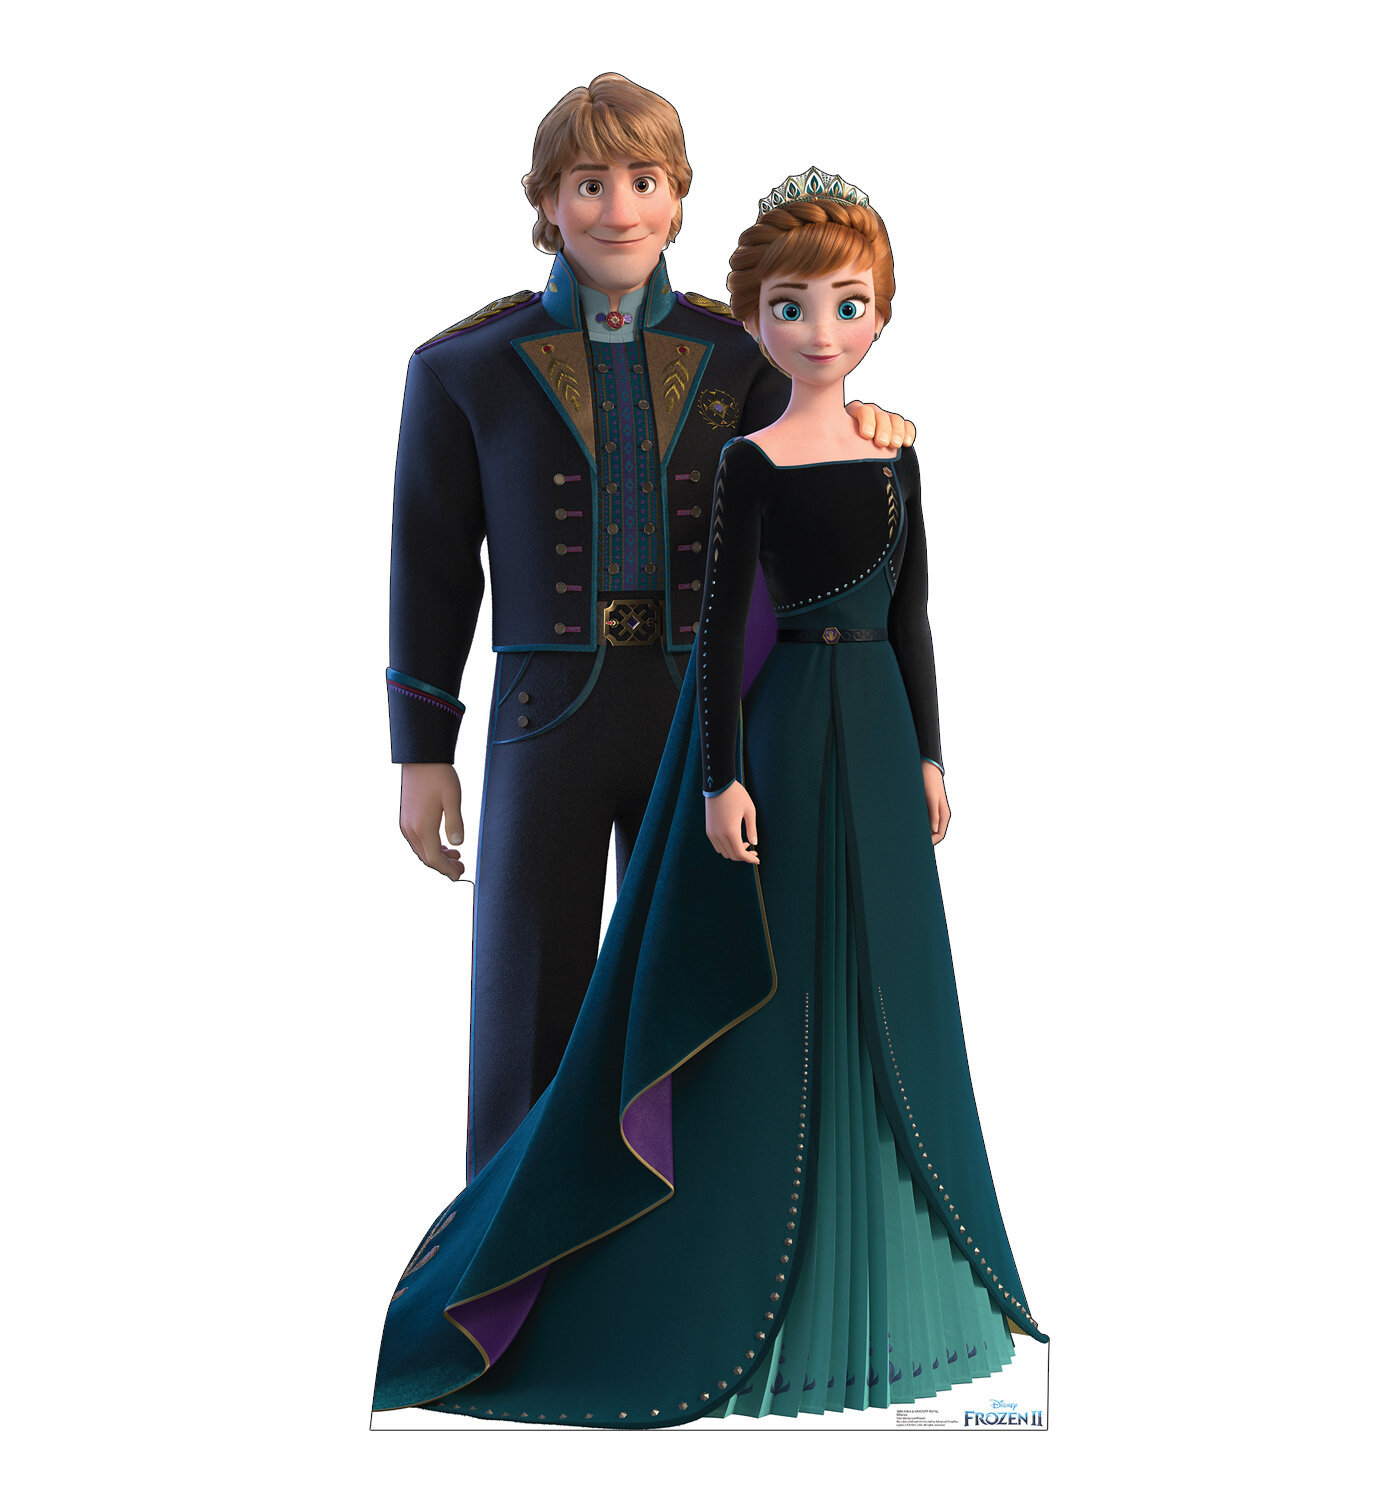 Frozen Anna Elsa Sven and Olaf Disney Lifesize CARDBOARD CUTOUT standup Set of 3 